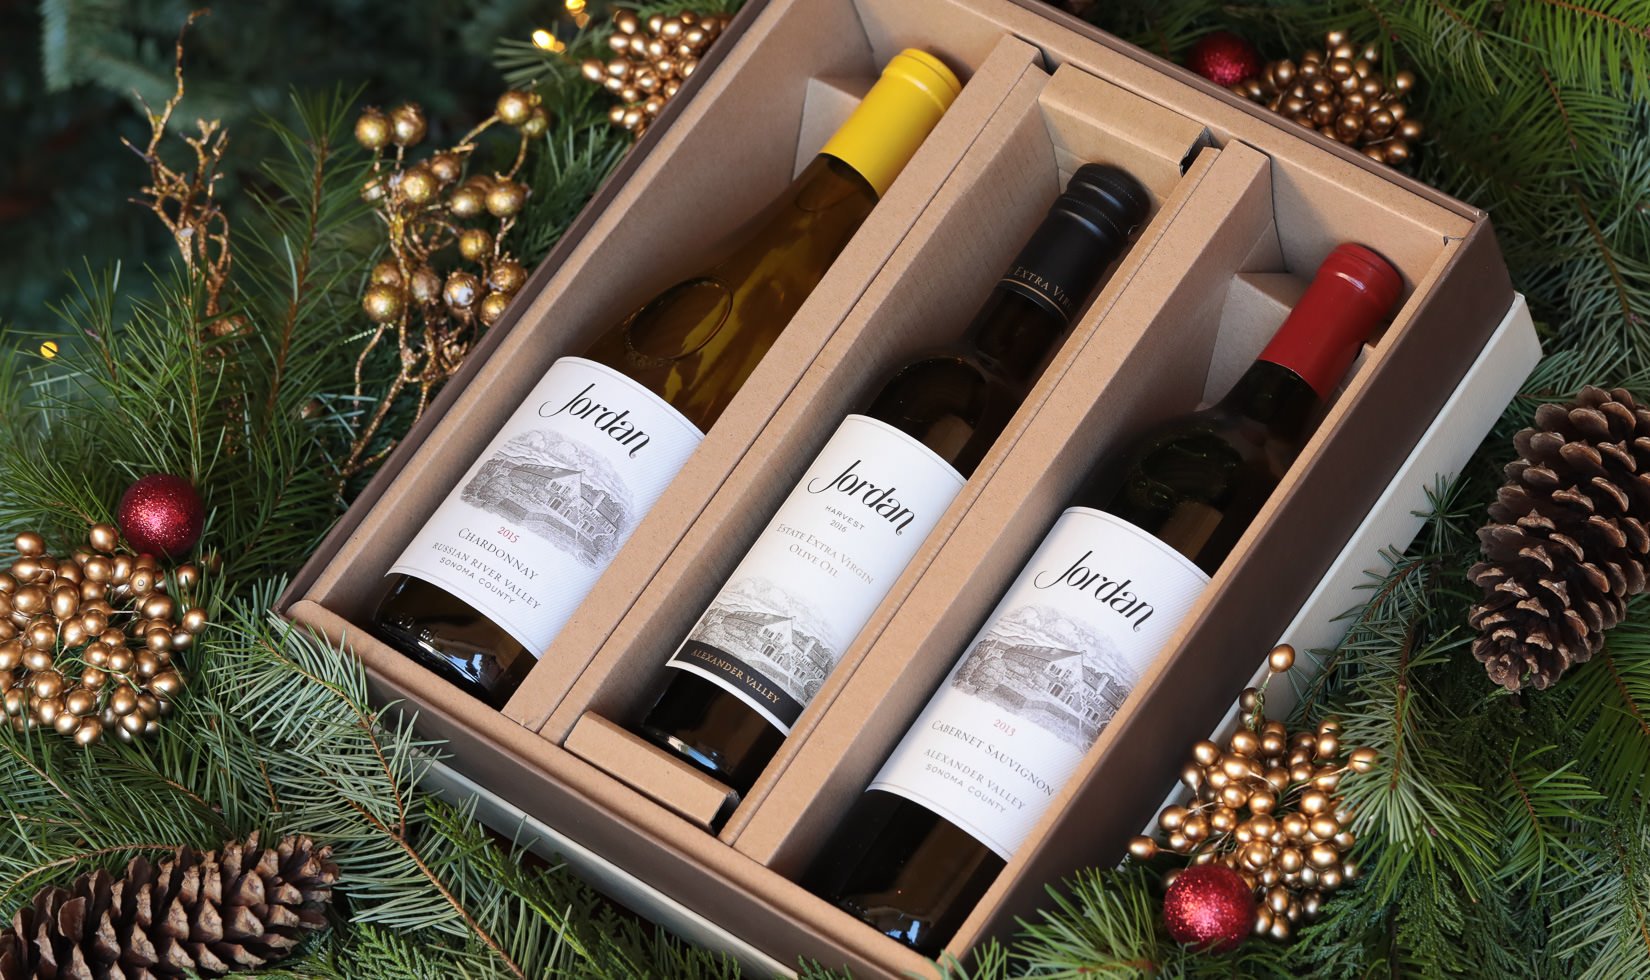 Jordan wine and olive oil gift set gift box